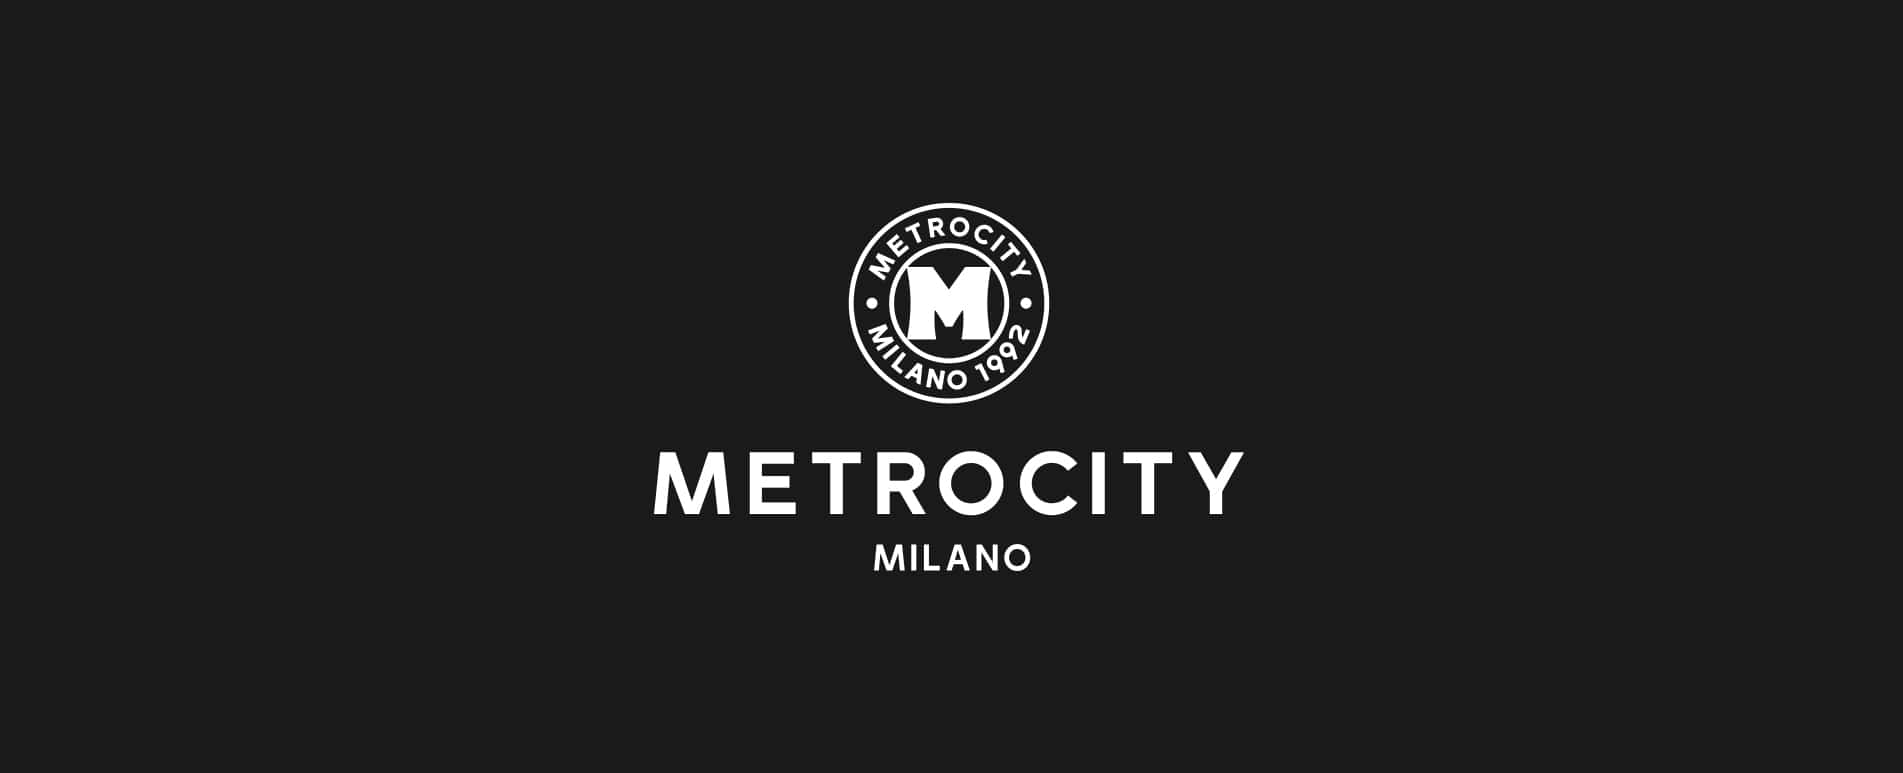 metrocity logo